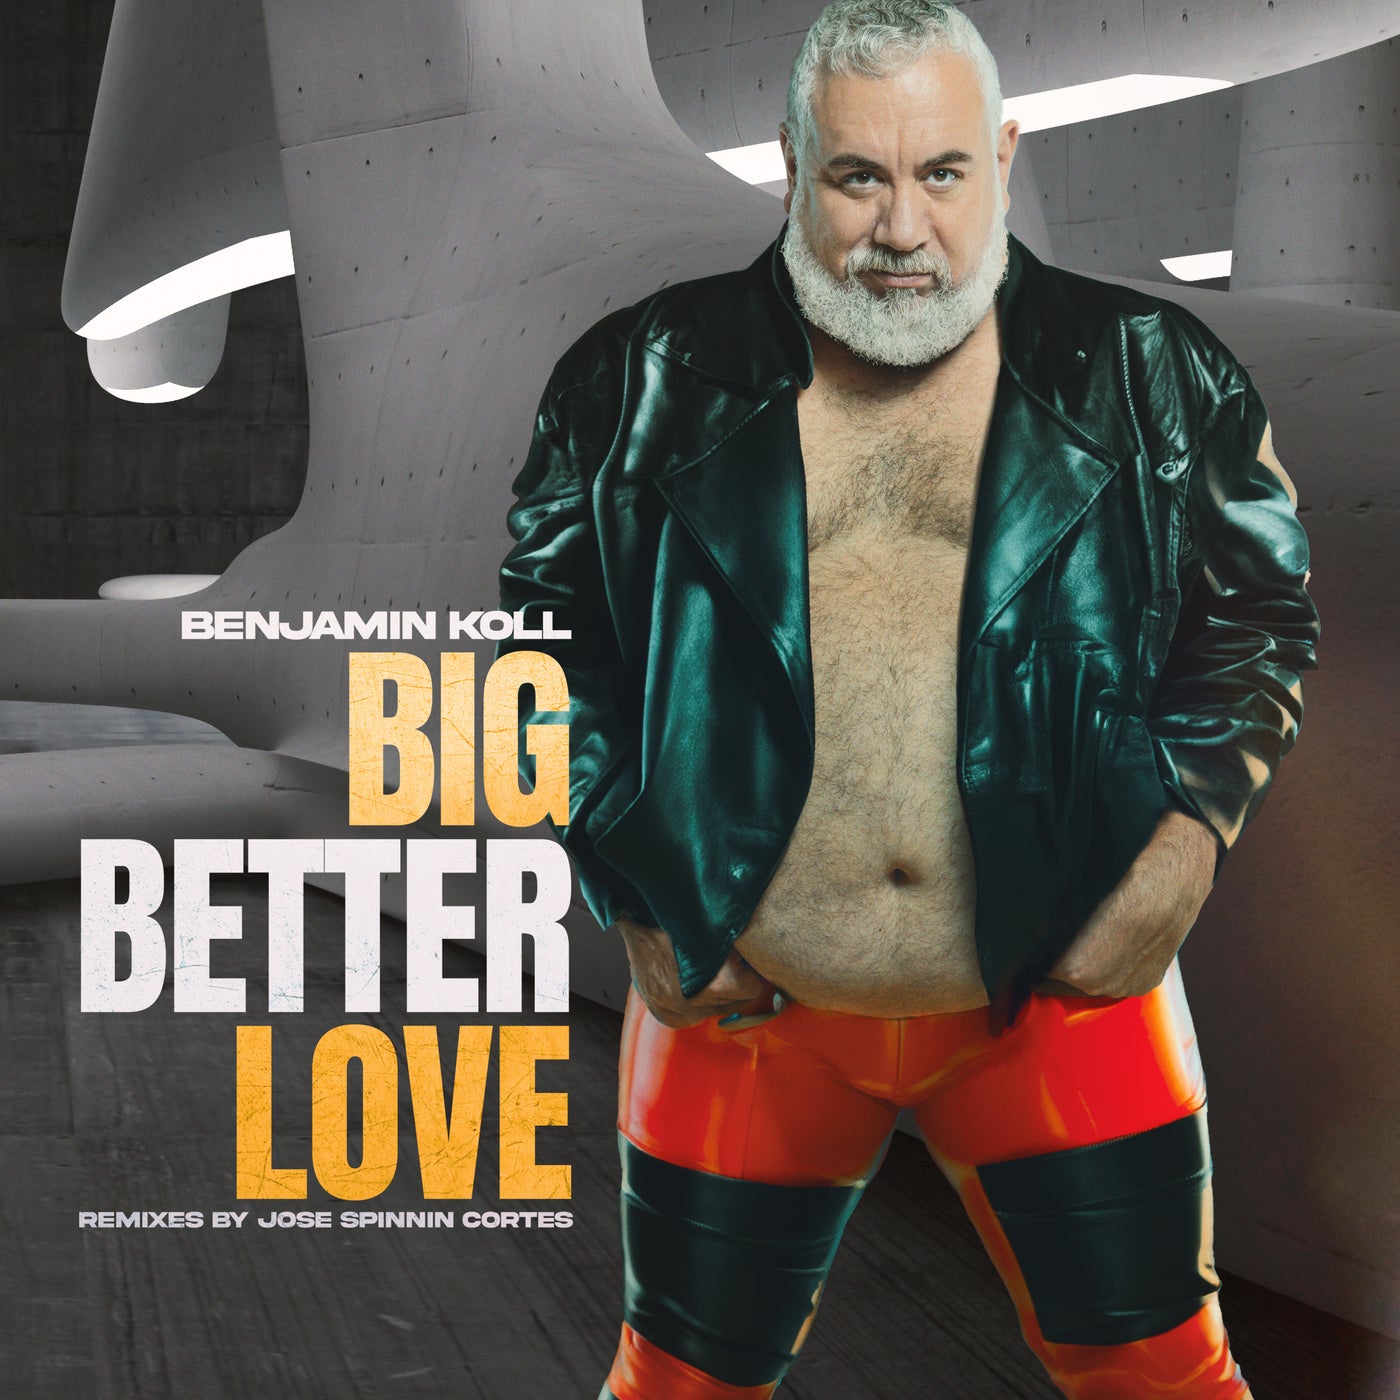 Big, Better Love (Remixes)